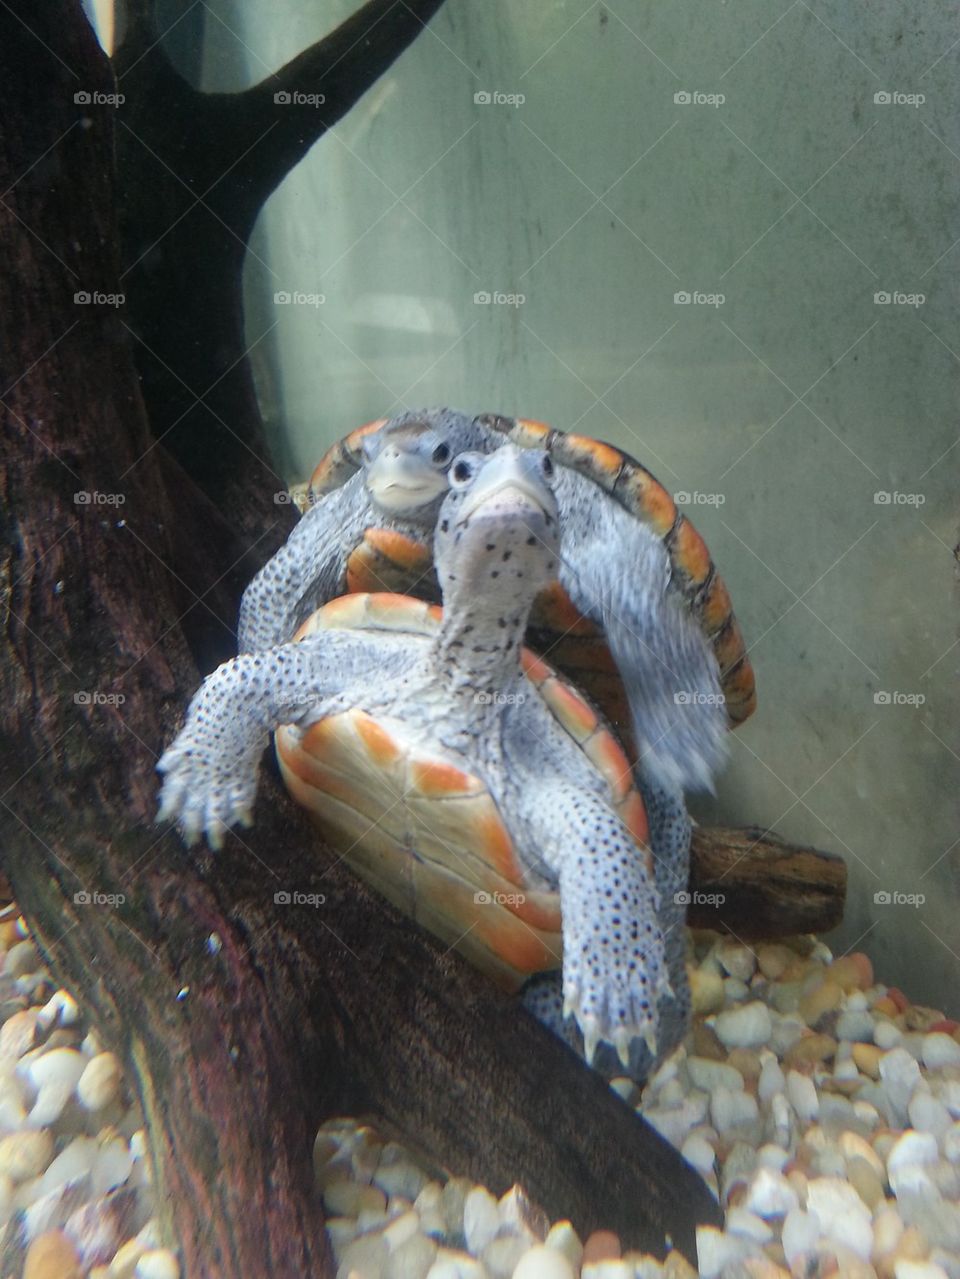 Turtle Friendships Last Forever